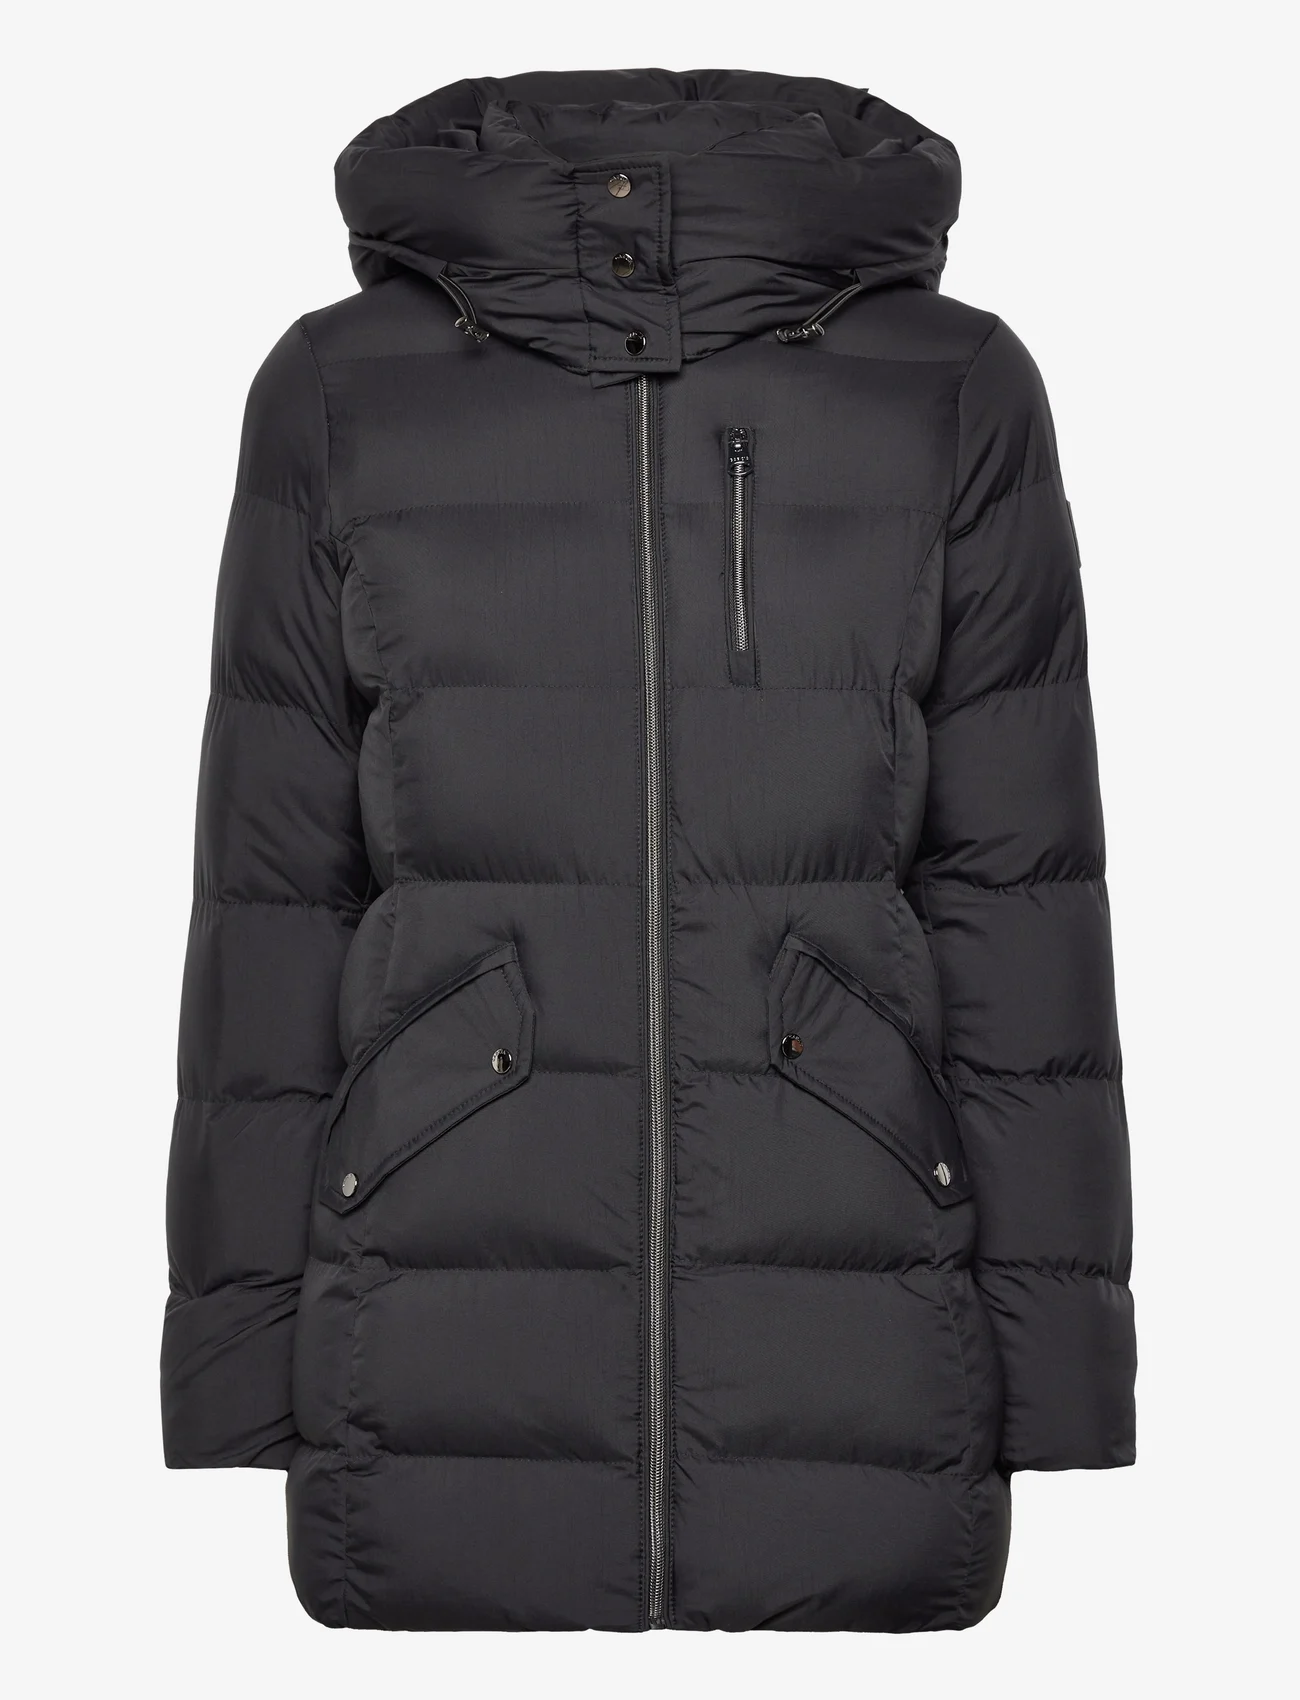 Garcia - ladies outdoor jacket - winter jackets - black - 0